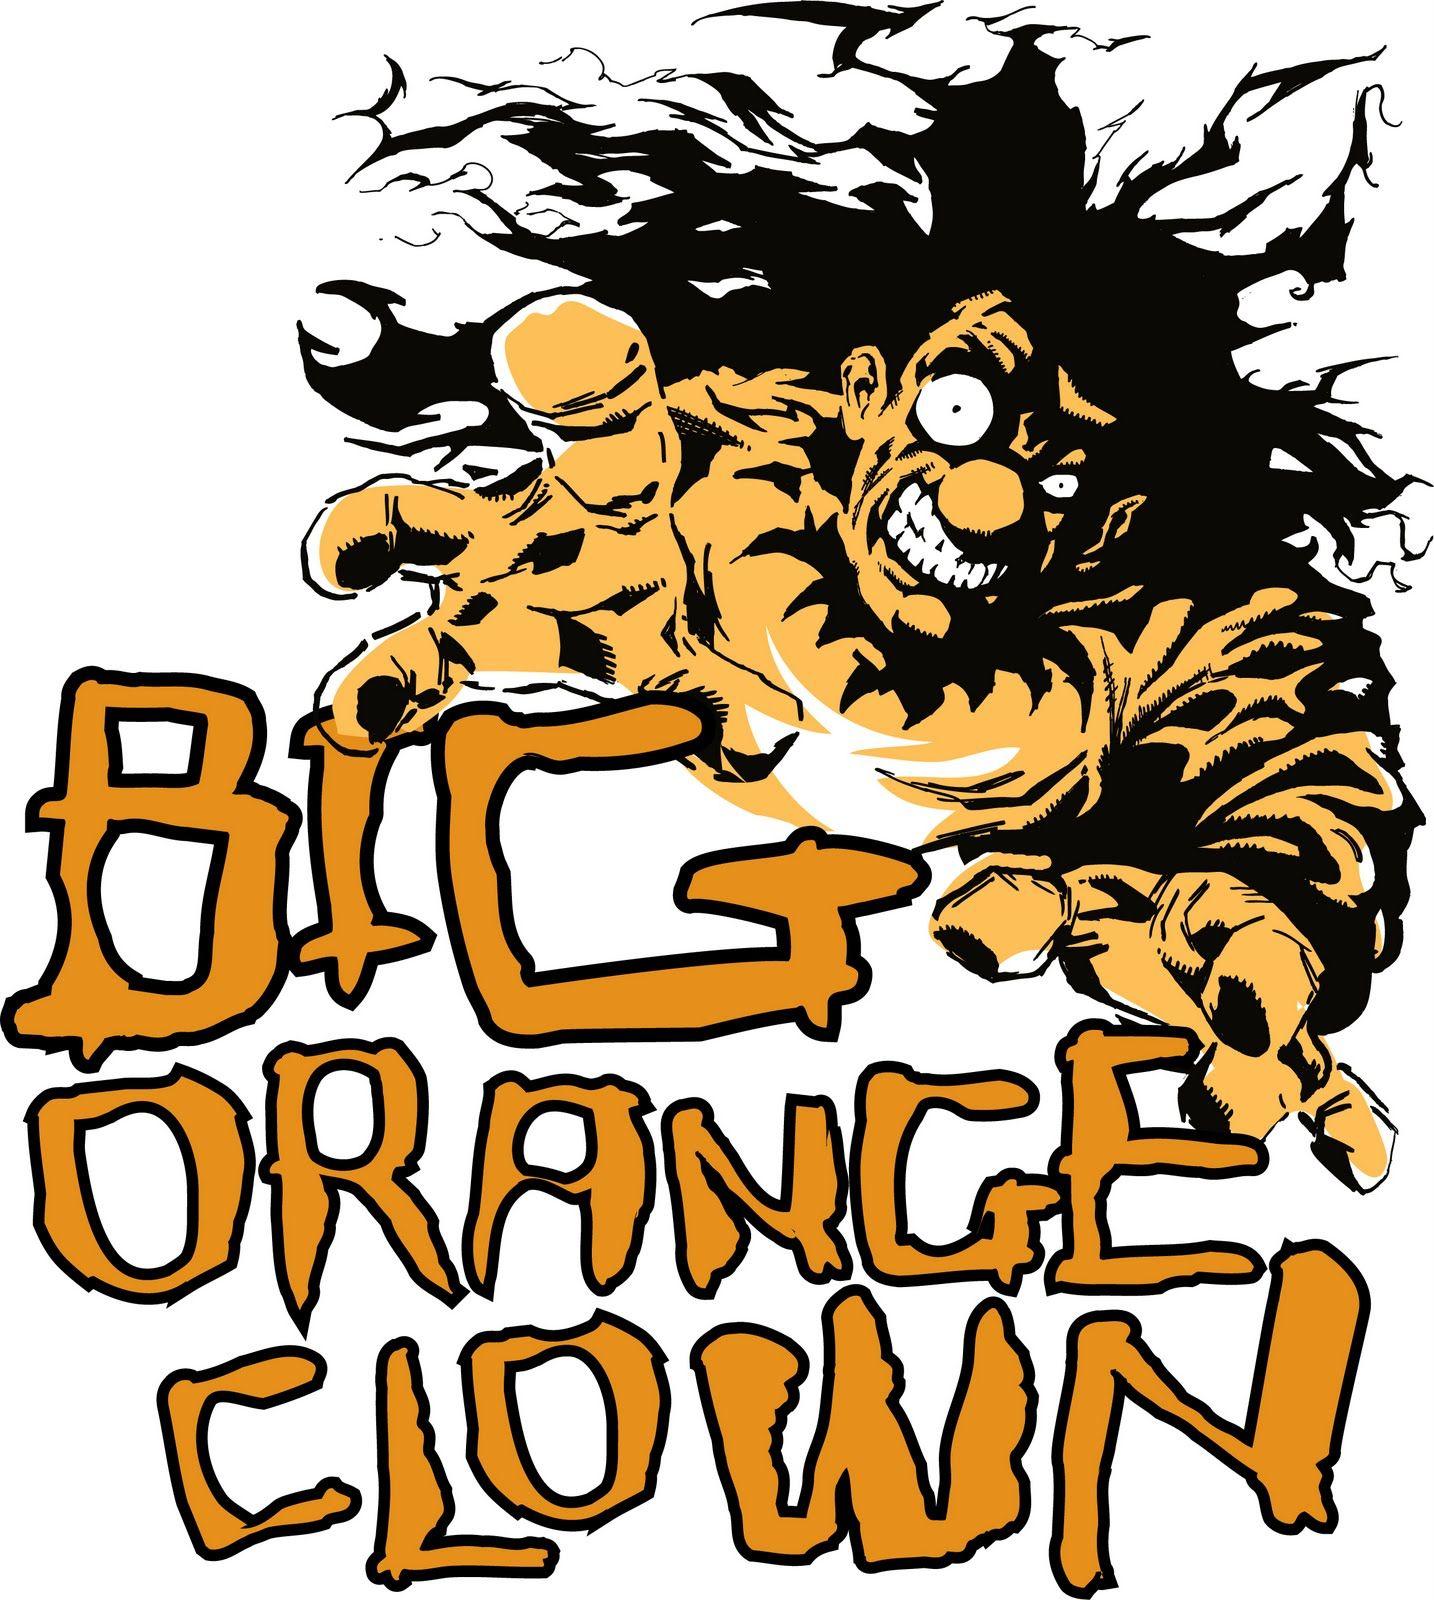 Orange Clown Logo - big red ape: Clown from Slipknot / Personal Logos - Big Orange Clown